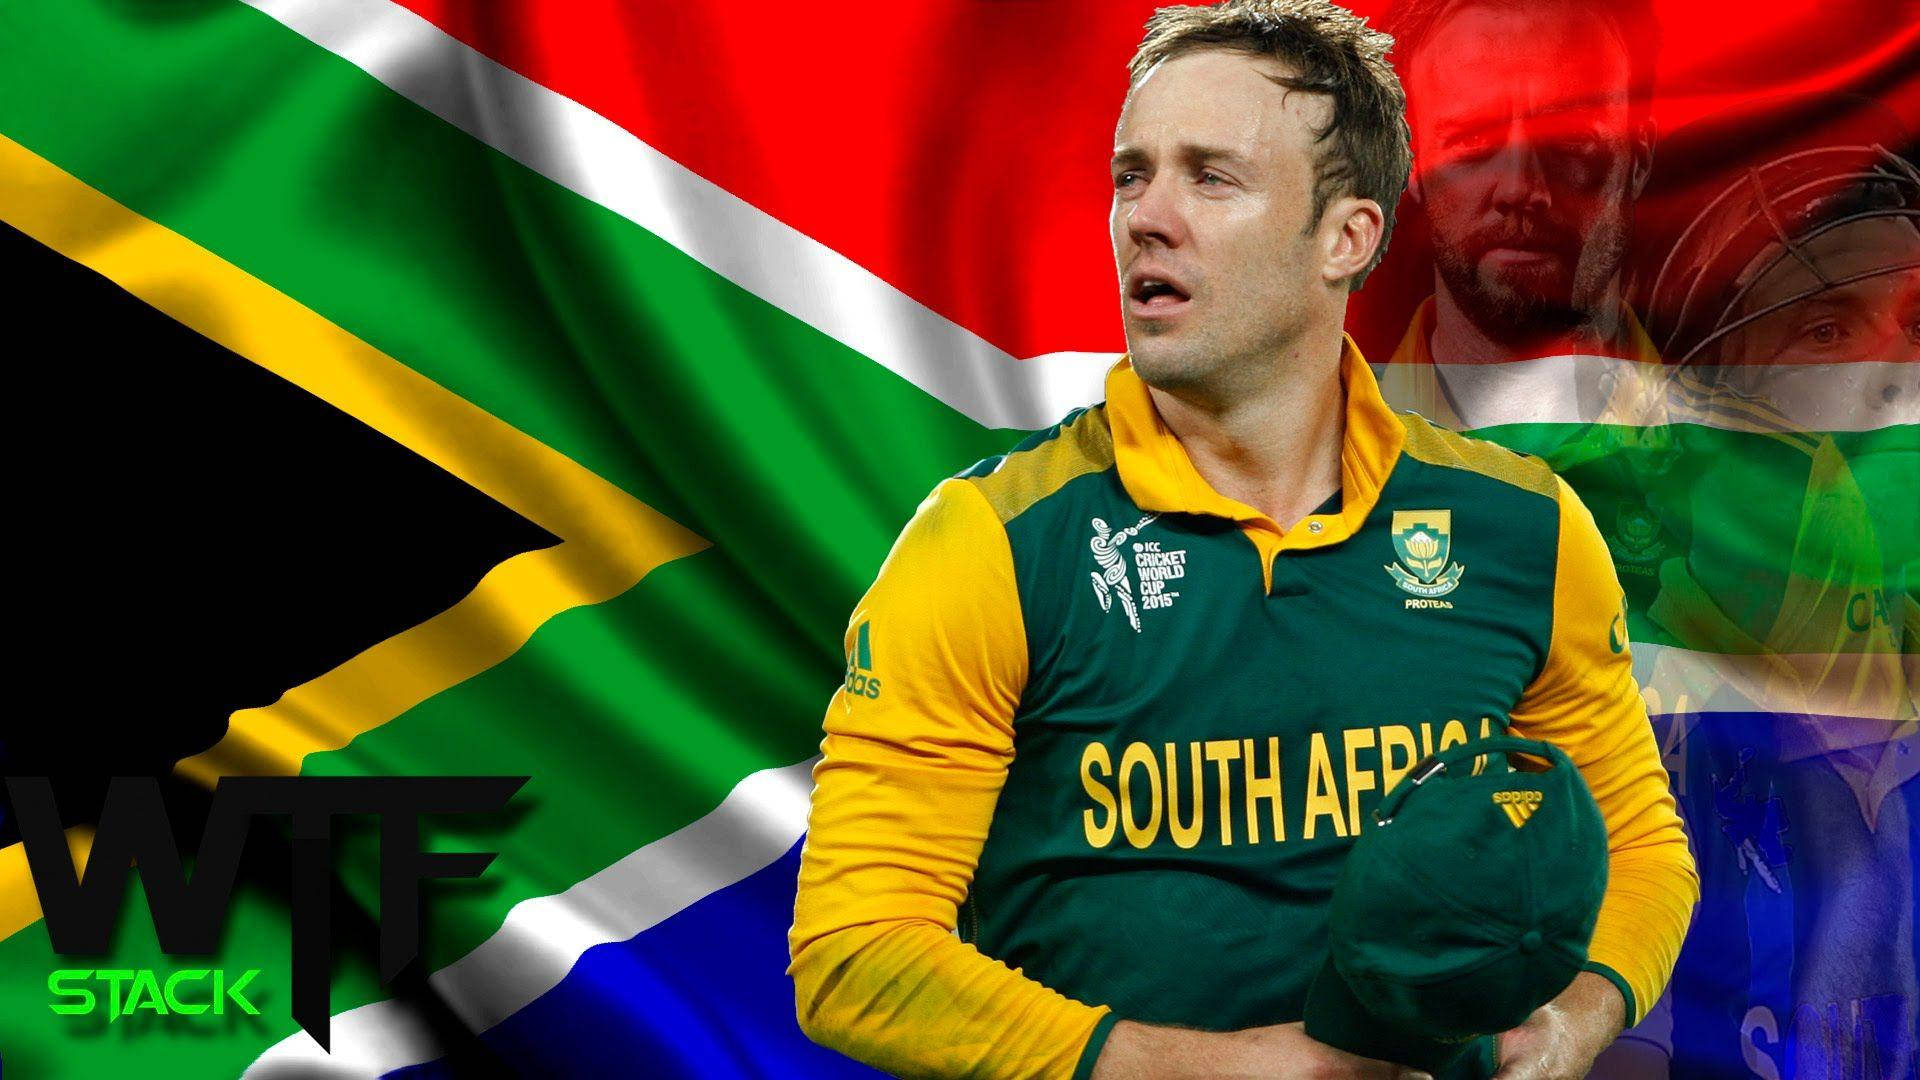 Download Ab De Villiers Against South African Flag Wallpaper | Wallpapers .com